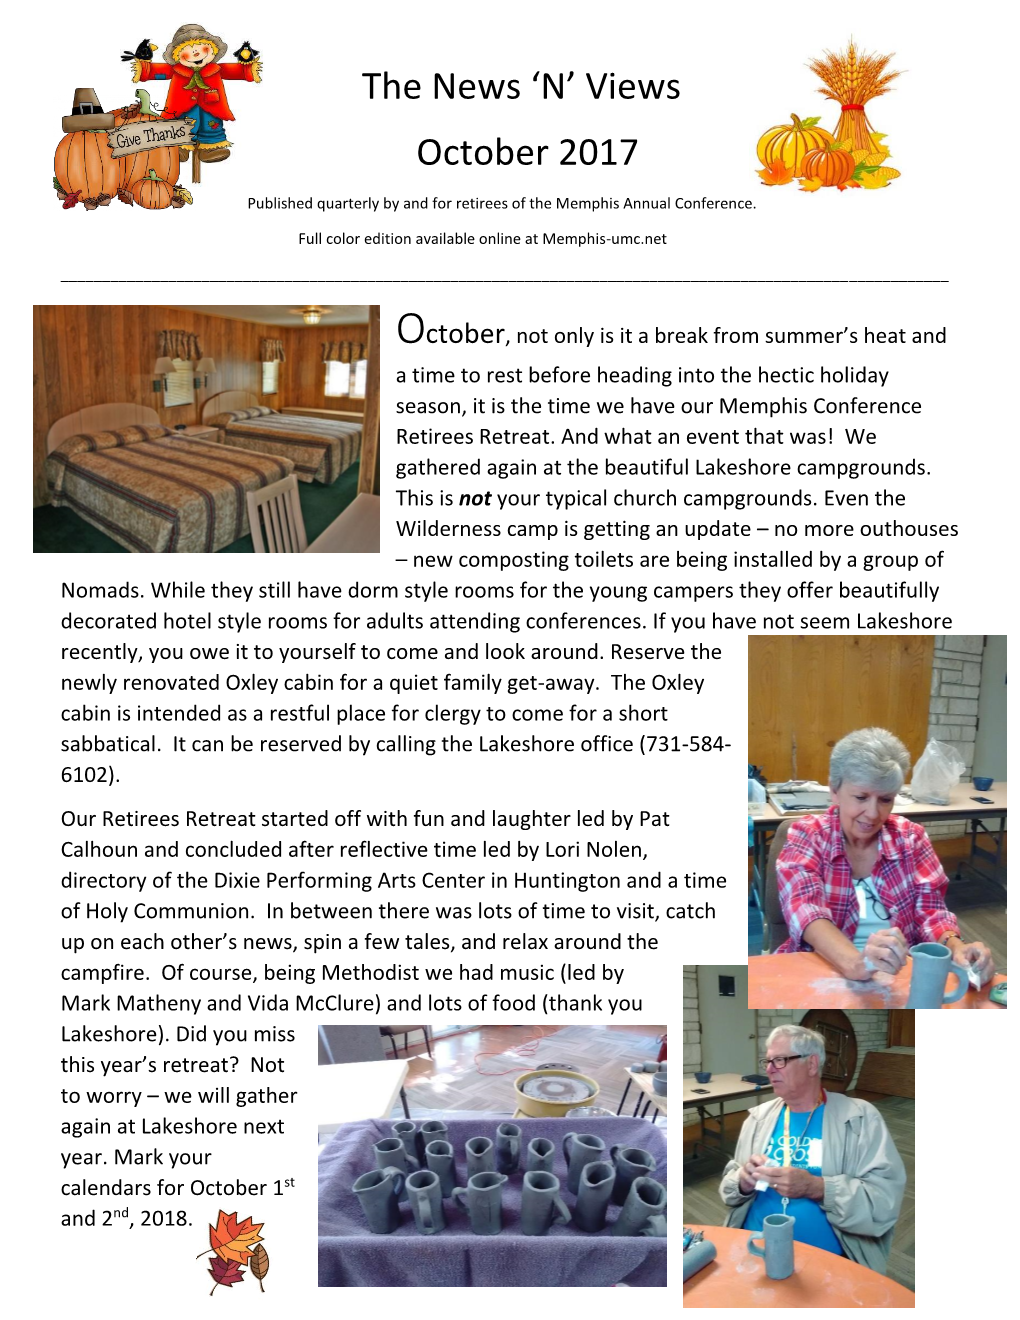 The News 'N' Views October 2017